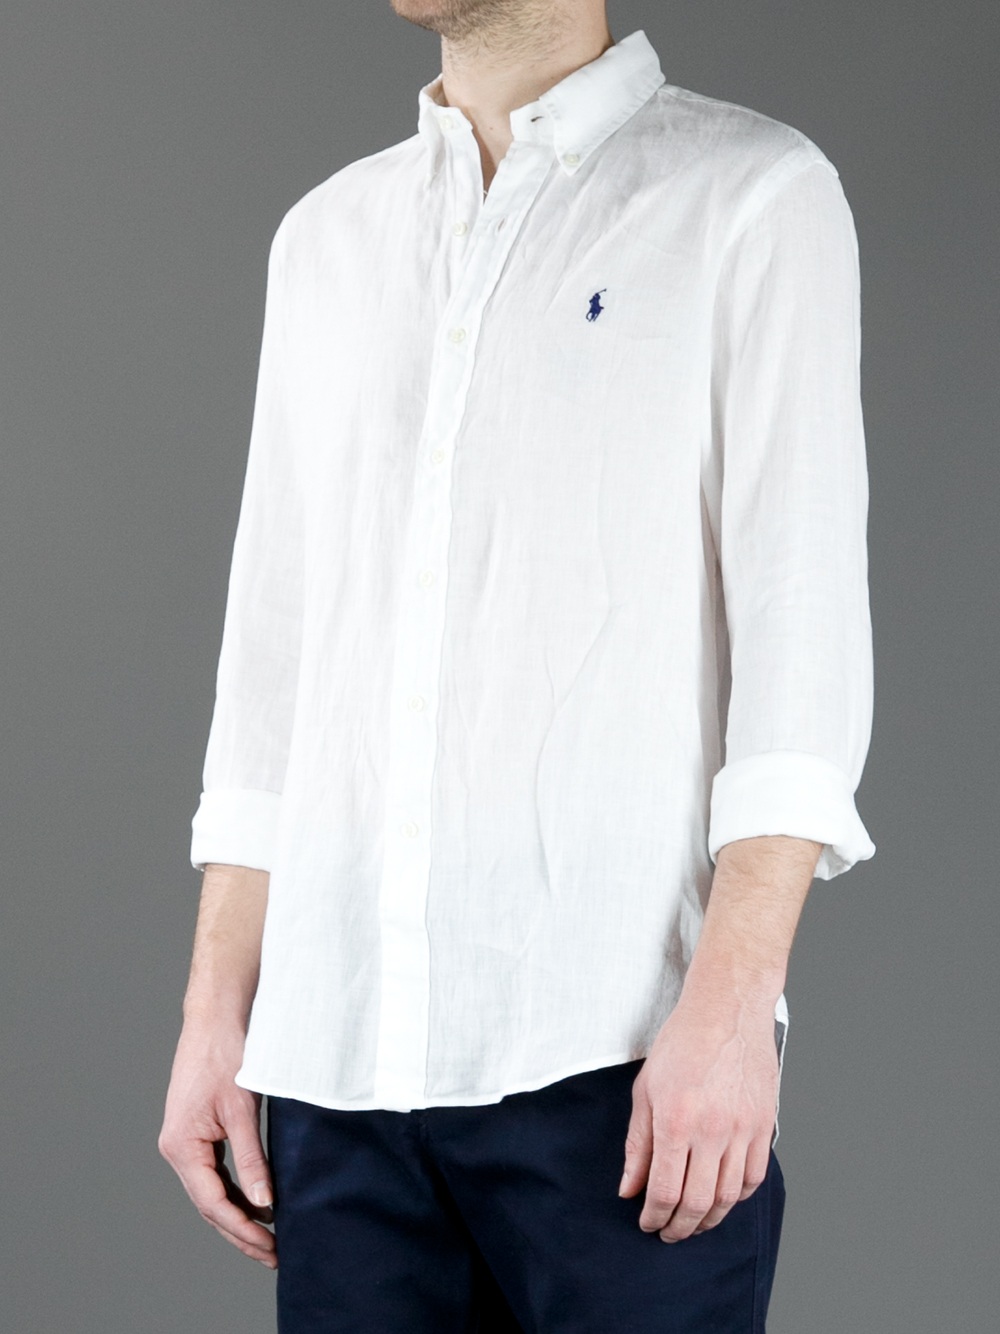 Lyst - Polo Ralph Lauren Button Down Shirt in White for Men